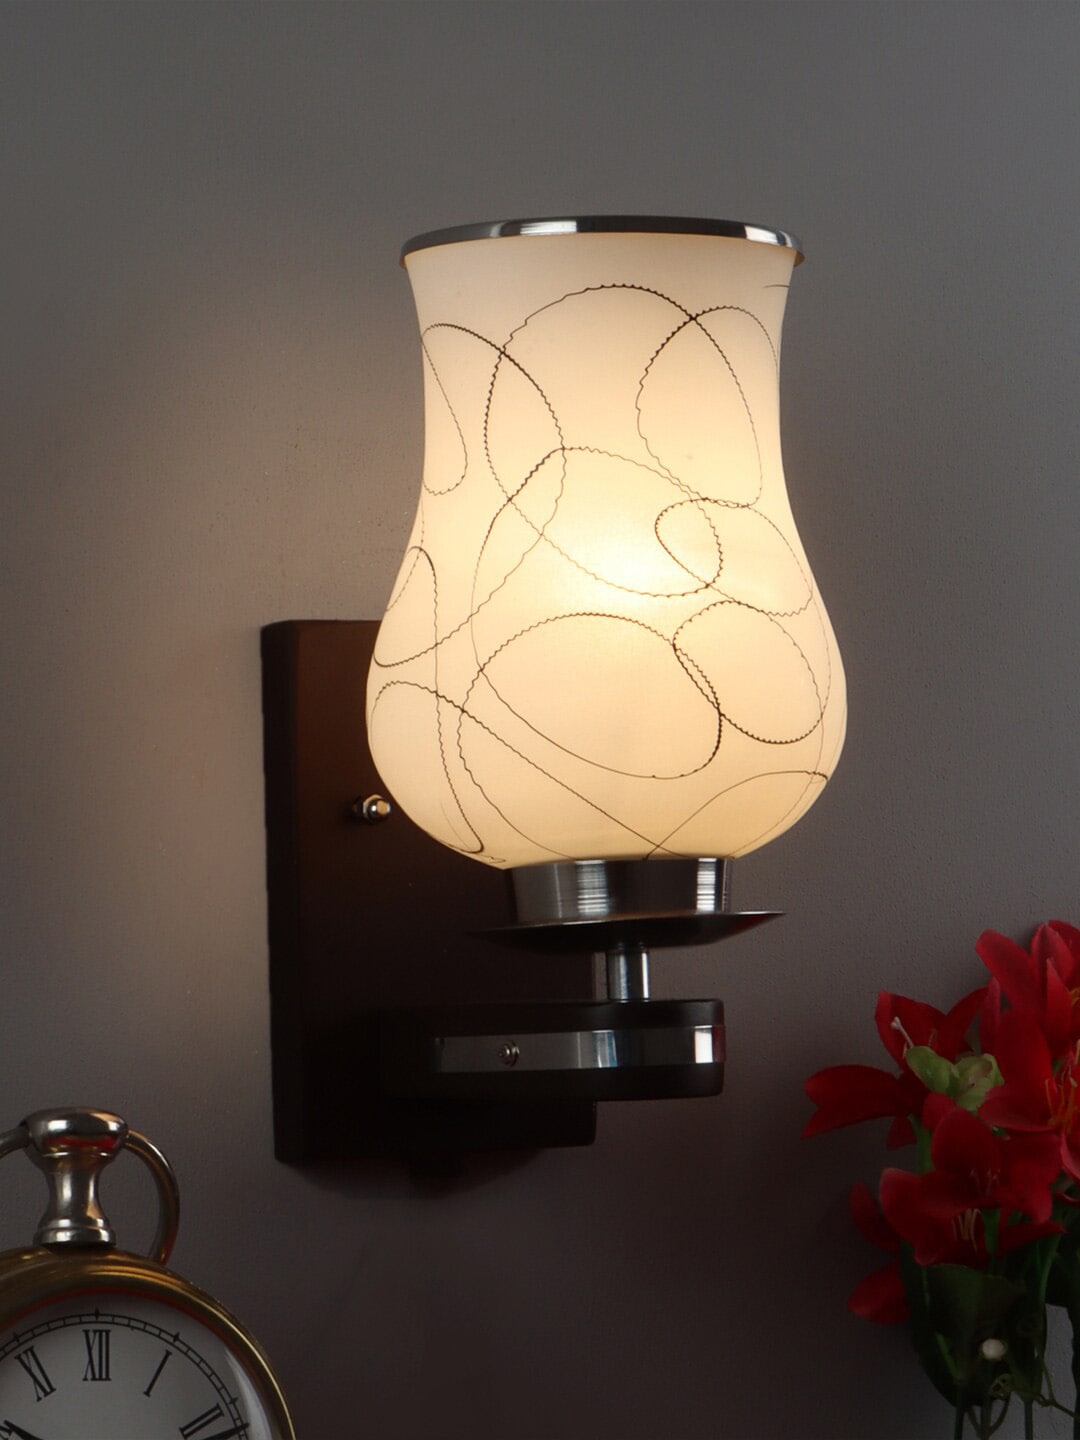 Foziq Brown & Silver-Toned Contemporary Wall Lamp Price in India